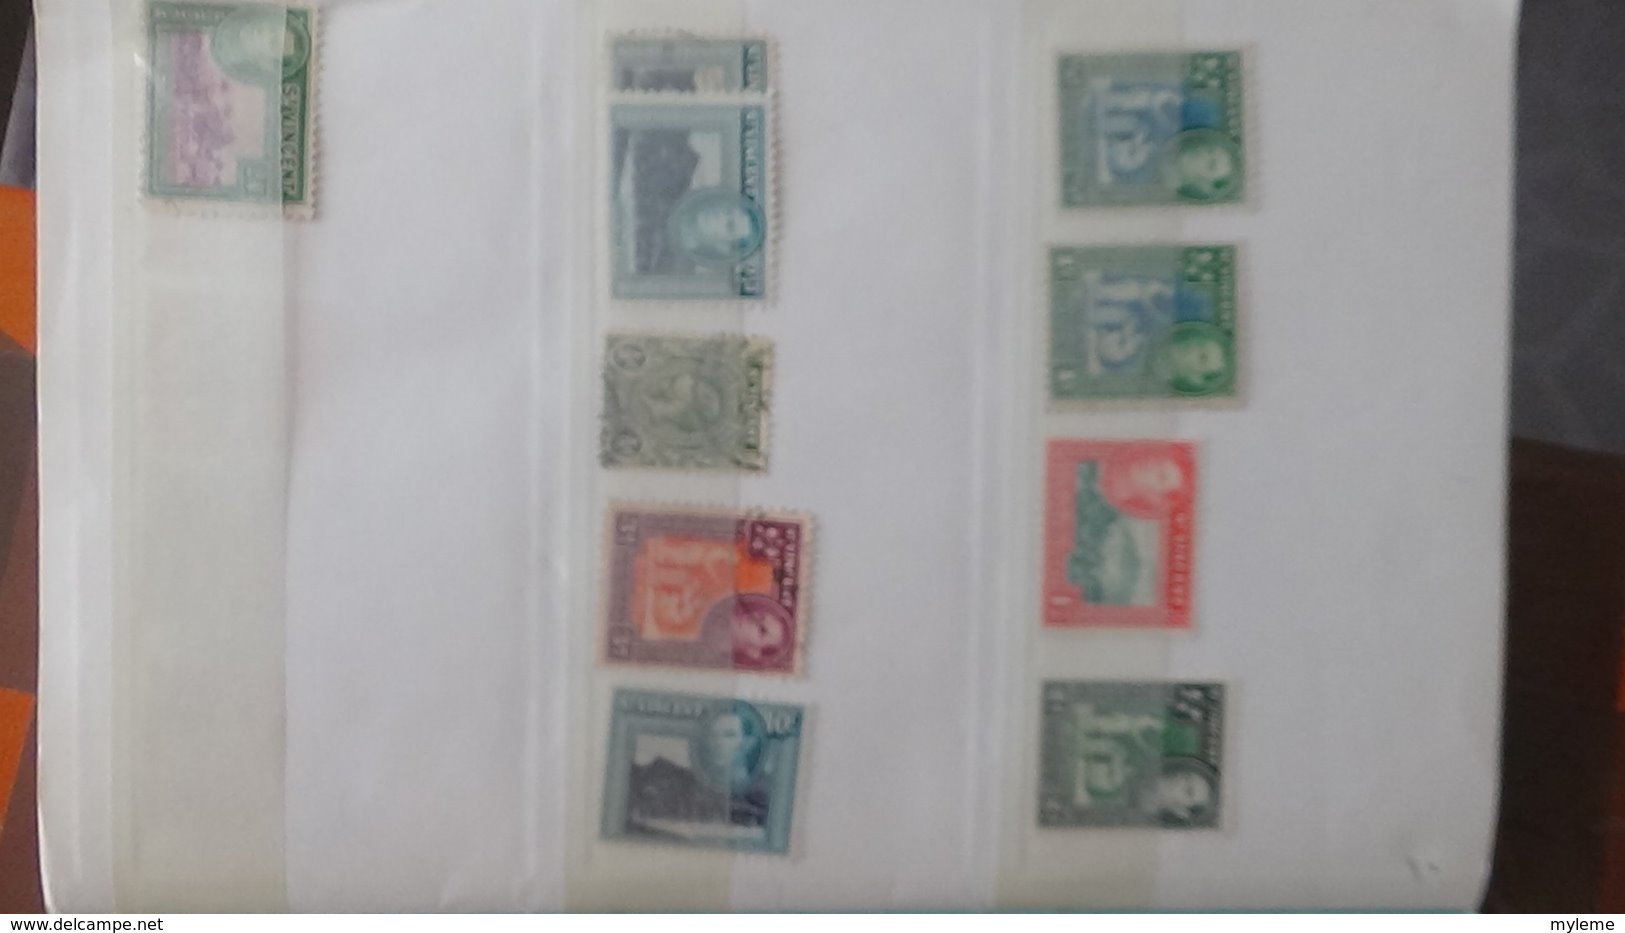 Carnets à choix de timbres anciens. Très sympa !!!